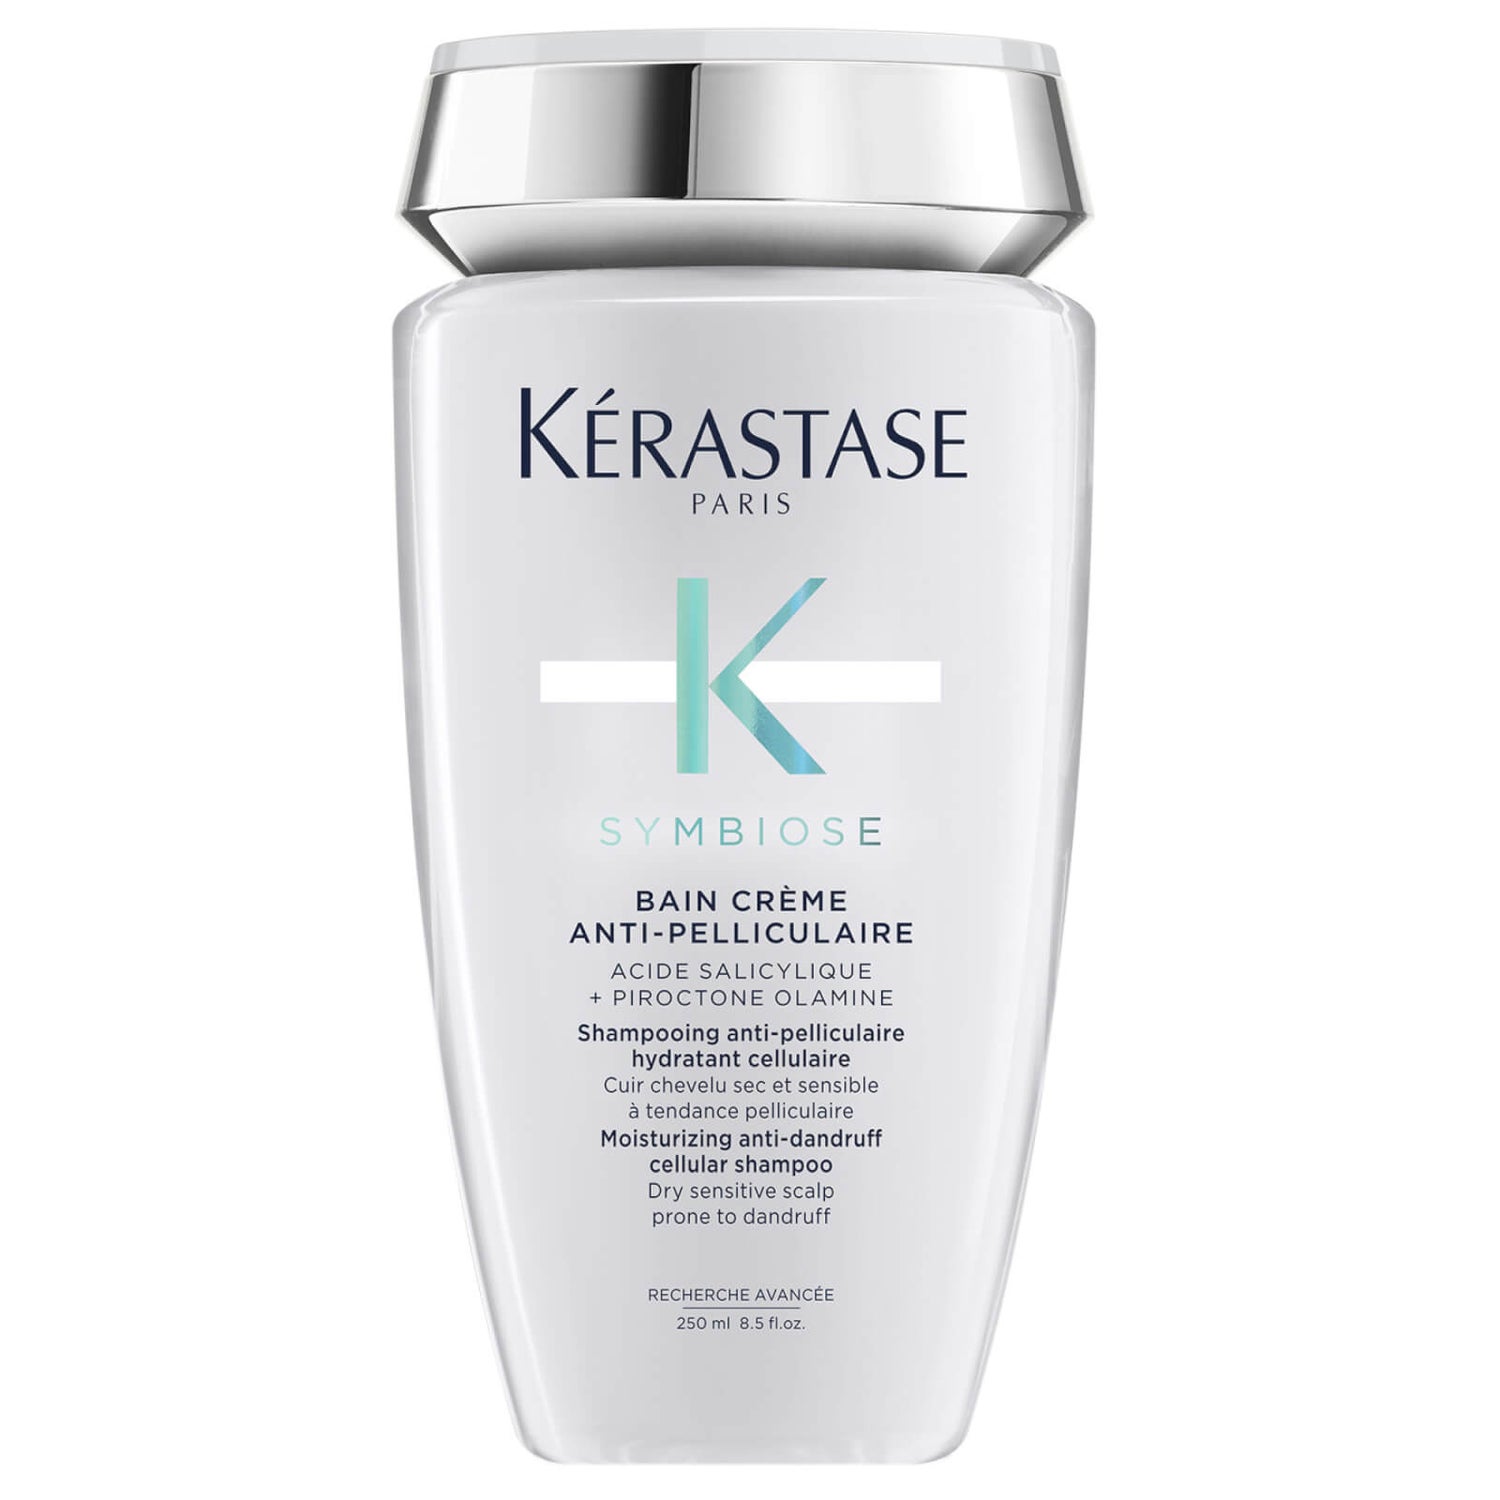 hvidløg konstant Opfattelse Kérastase Symbiose Moisturising Anti-Dandruff Cellular Shampoo, For Dry  Sensitive Scalp, Prone To Dandruff, 250ml - lookfantastic